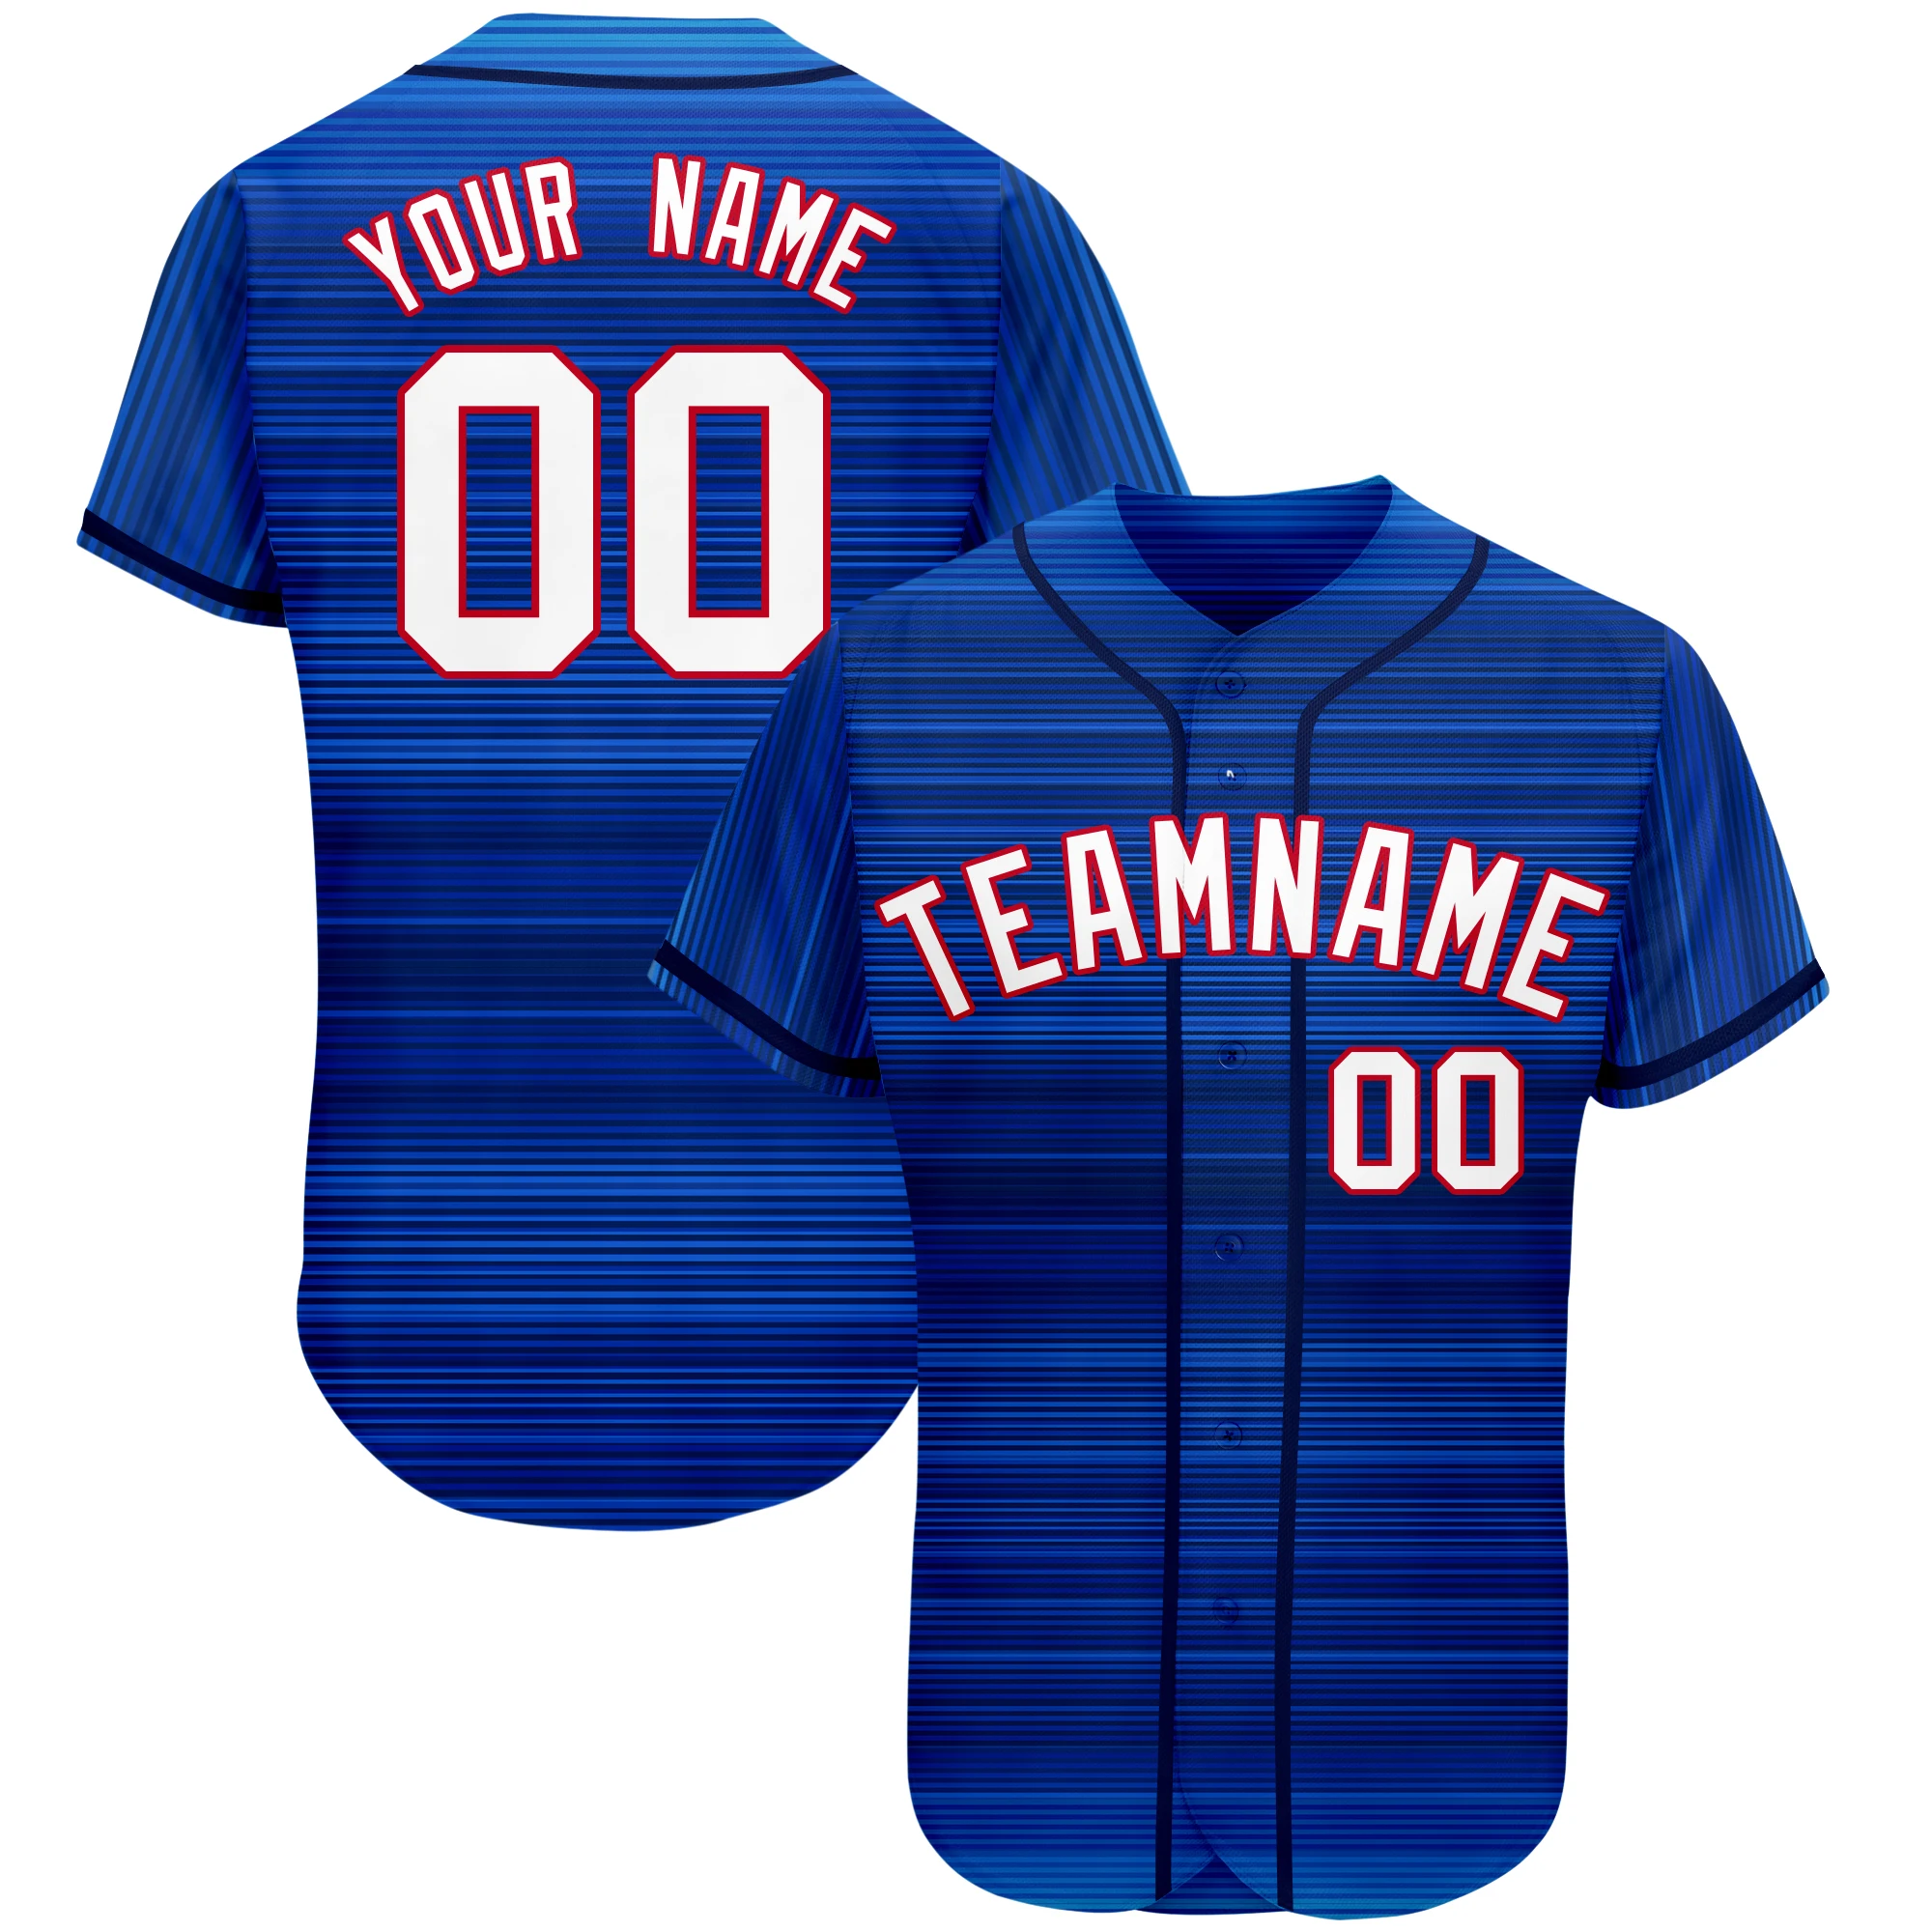 

Custom Baseball Jerseys Athlete's Uniforms Printed Shirts for Men/Kids Add Team Name Number